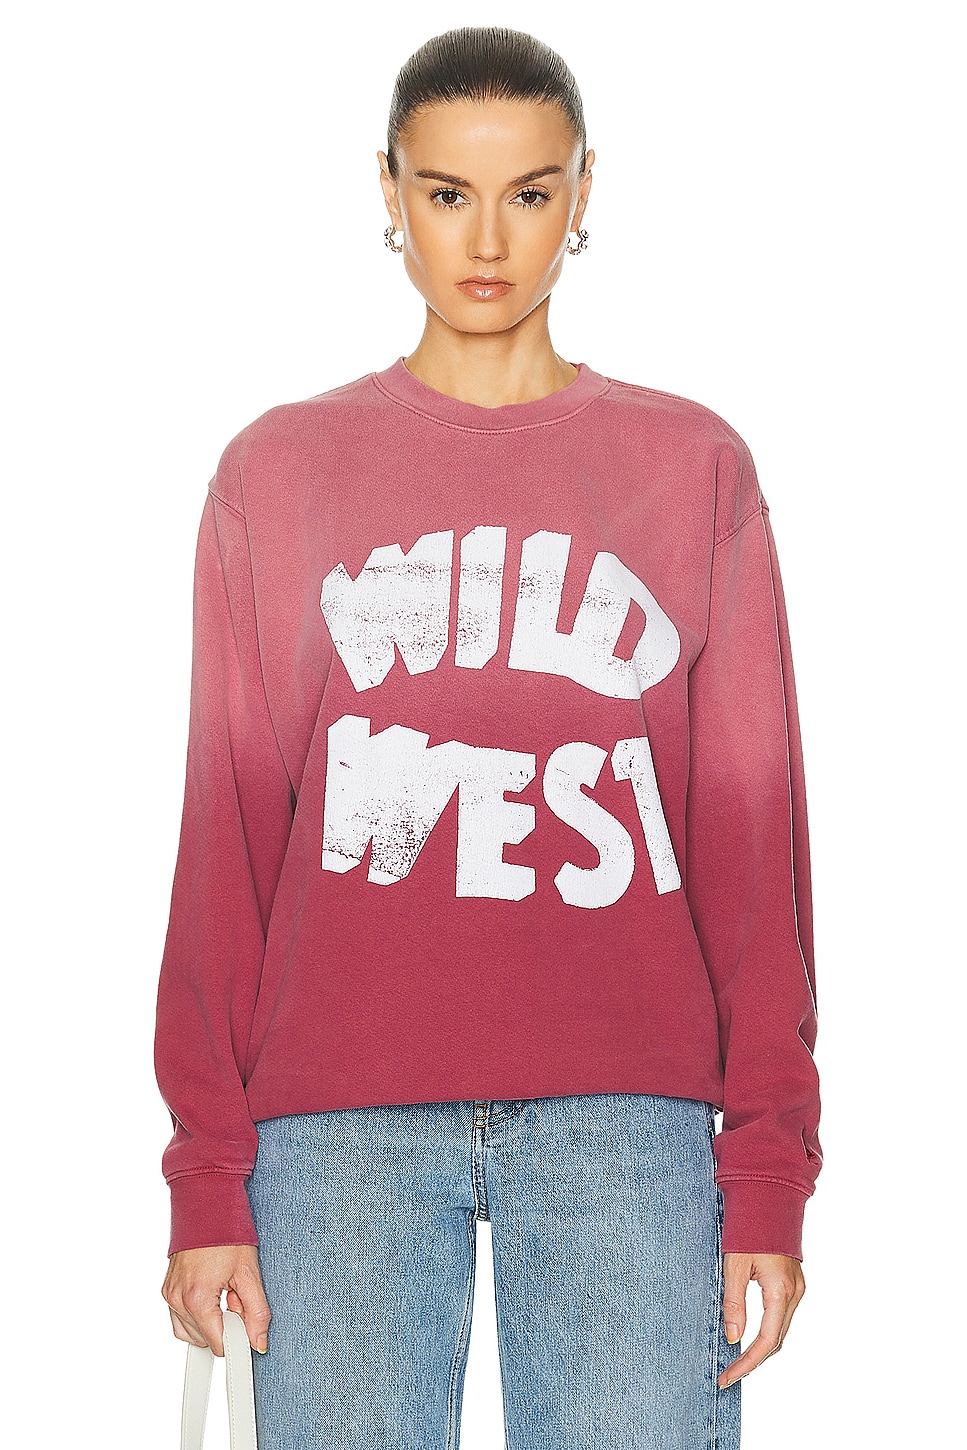 Wild West Sweater in Rose